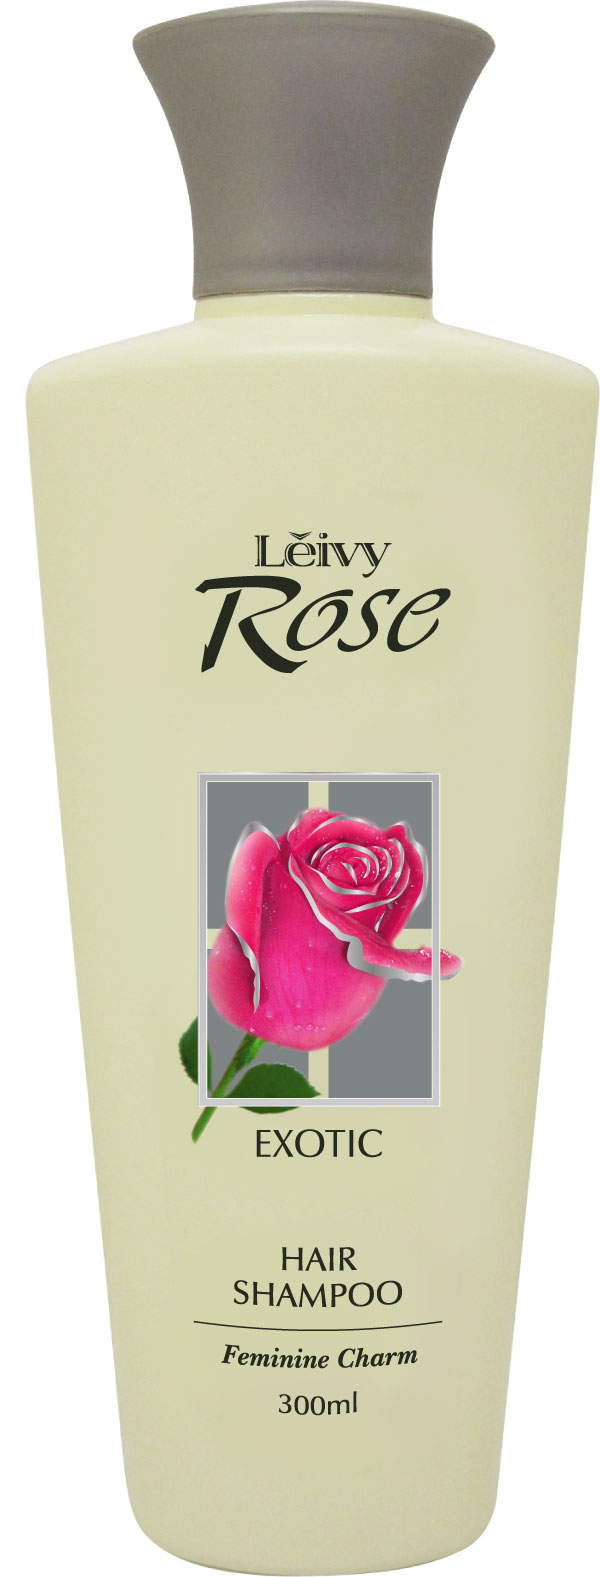 Leivy Rose Exotic - Hair Shampoo (300ml)